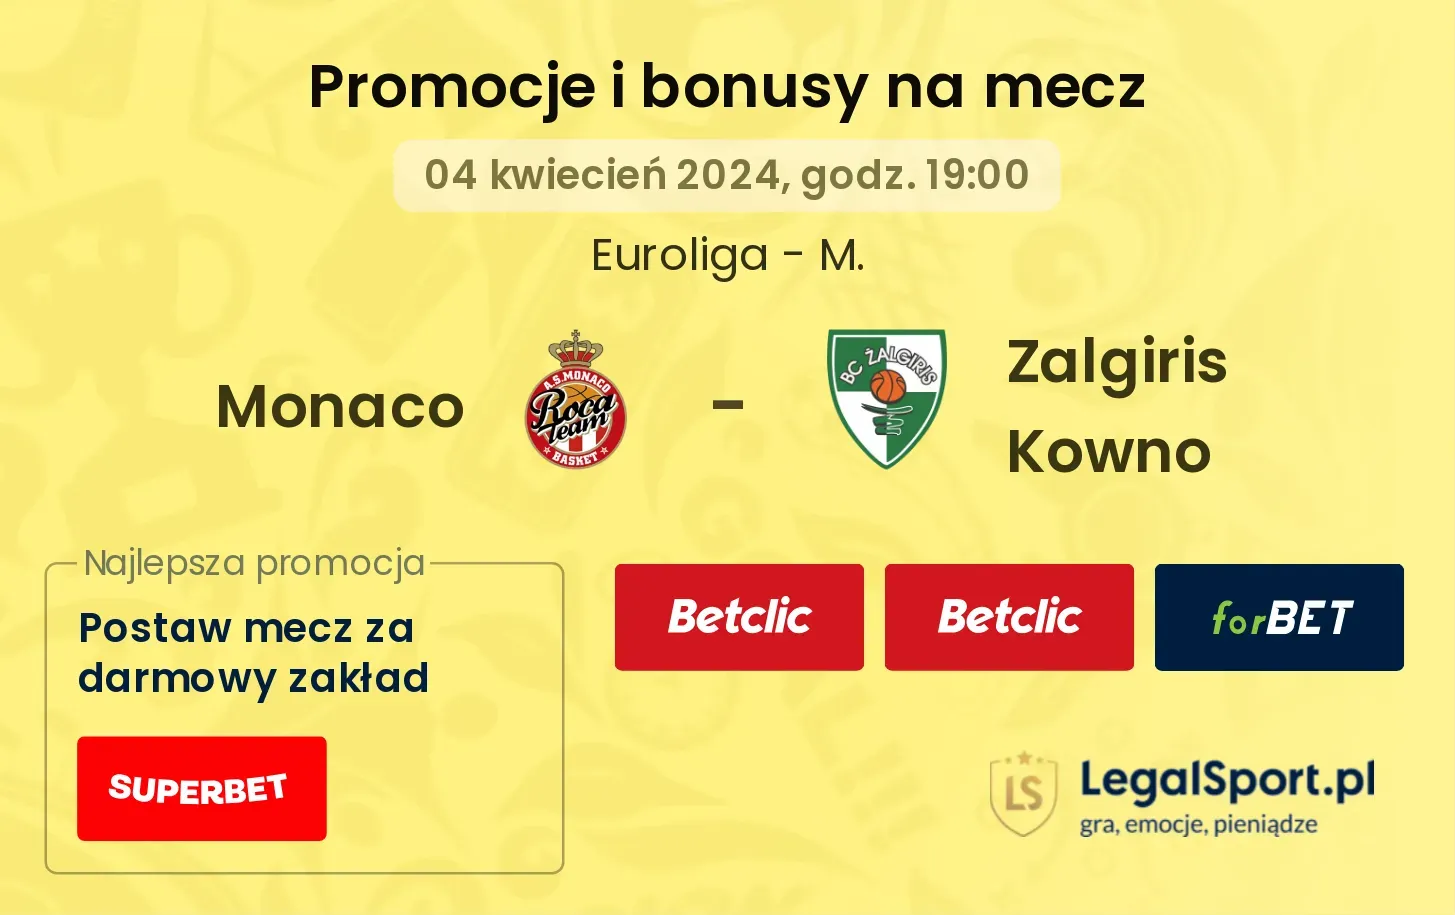 Monaco - Zalgiris Kowno promocje bonusy na mecz